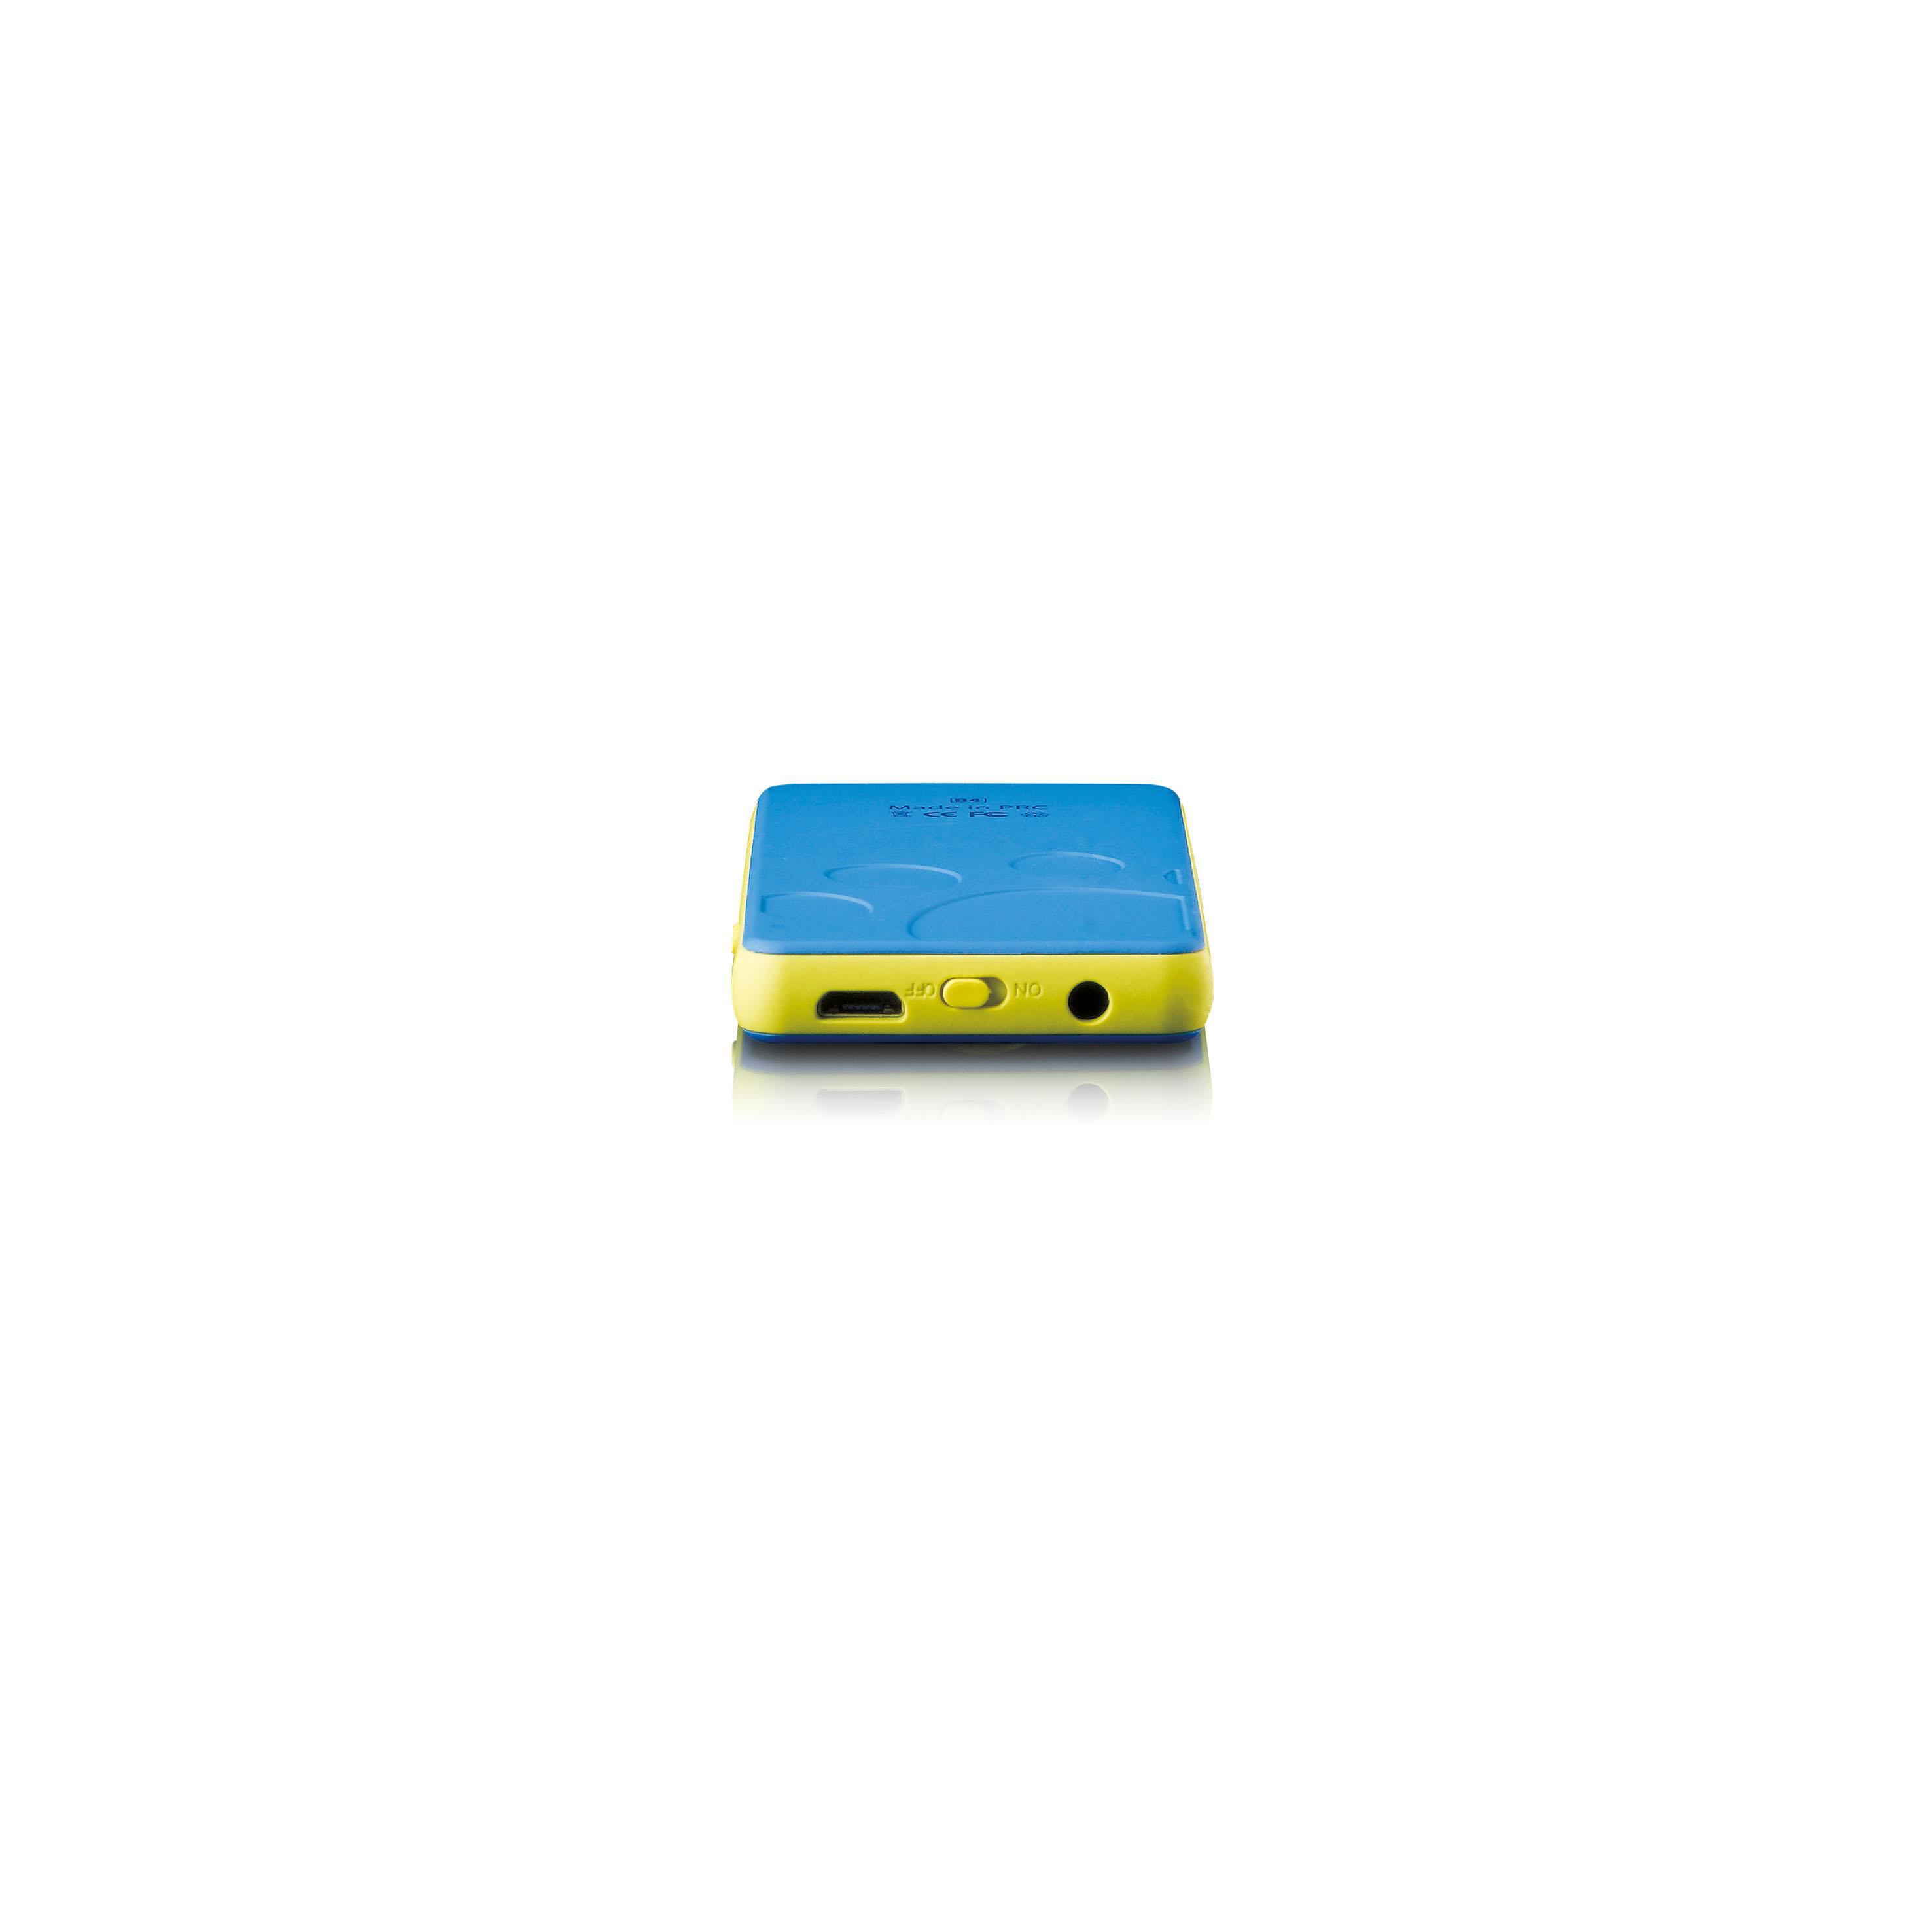 LENCO Xemio-560 MP3 Player GB, 8 Blau